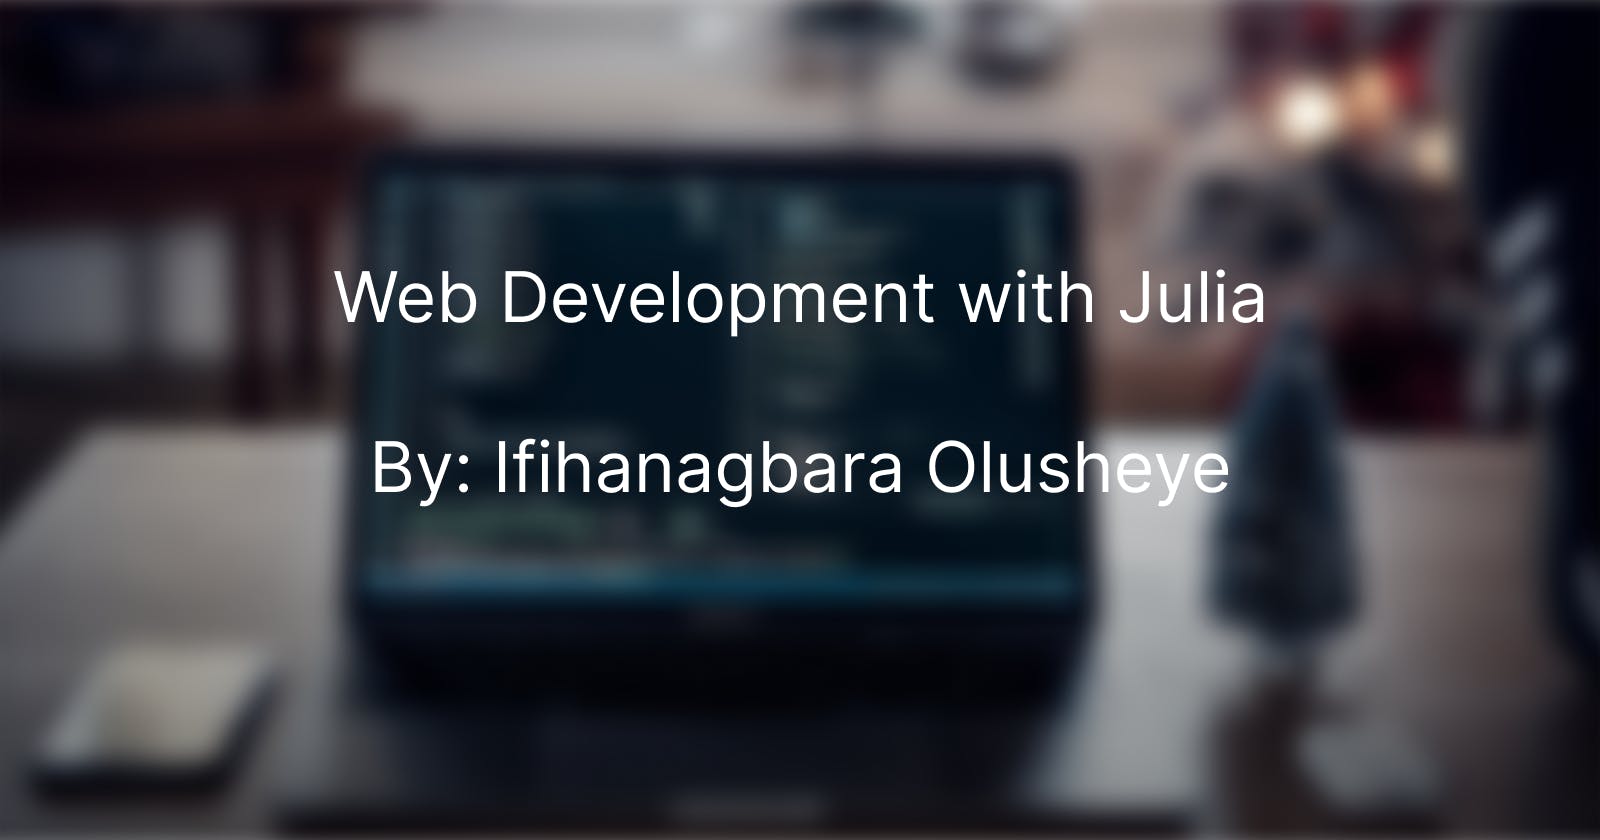 Web Development with Julia